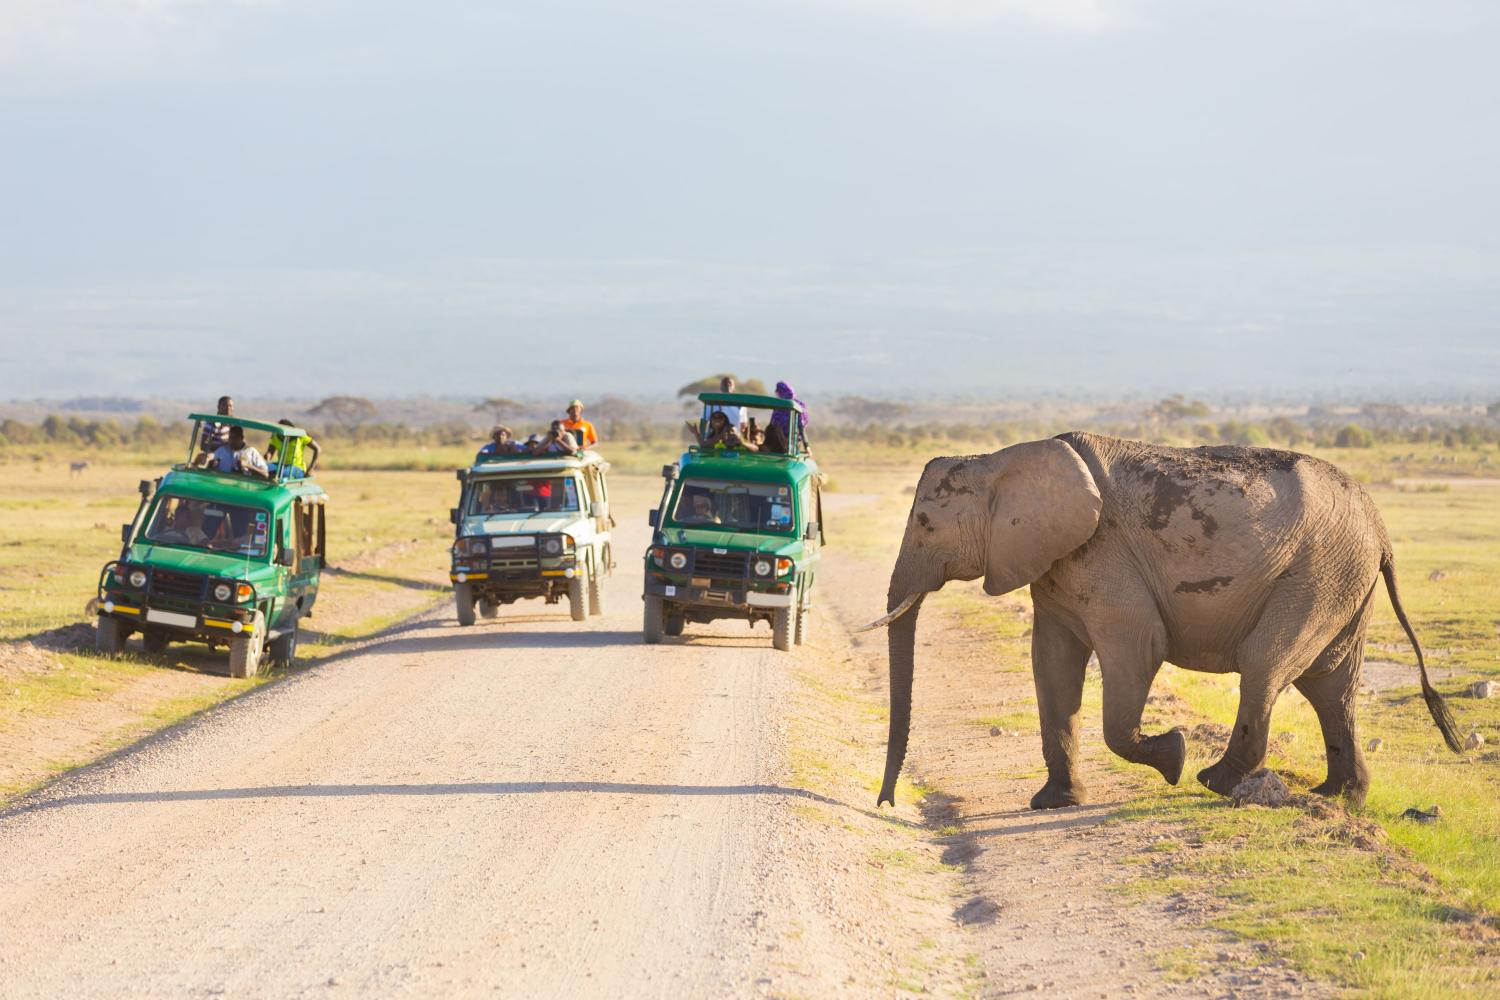 Tourists in safari jeeps watching and taking photos of big wild elephant crossing dirt roadi in Amboseli national park, Kenya.